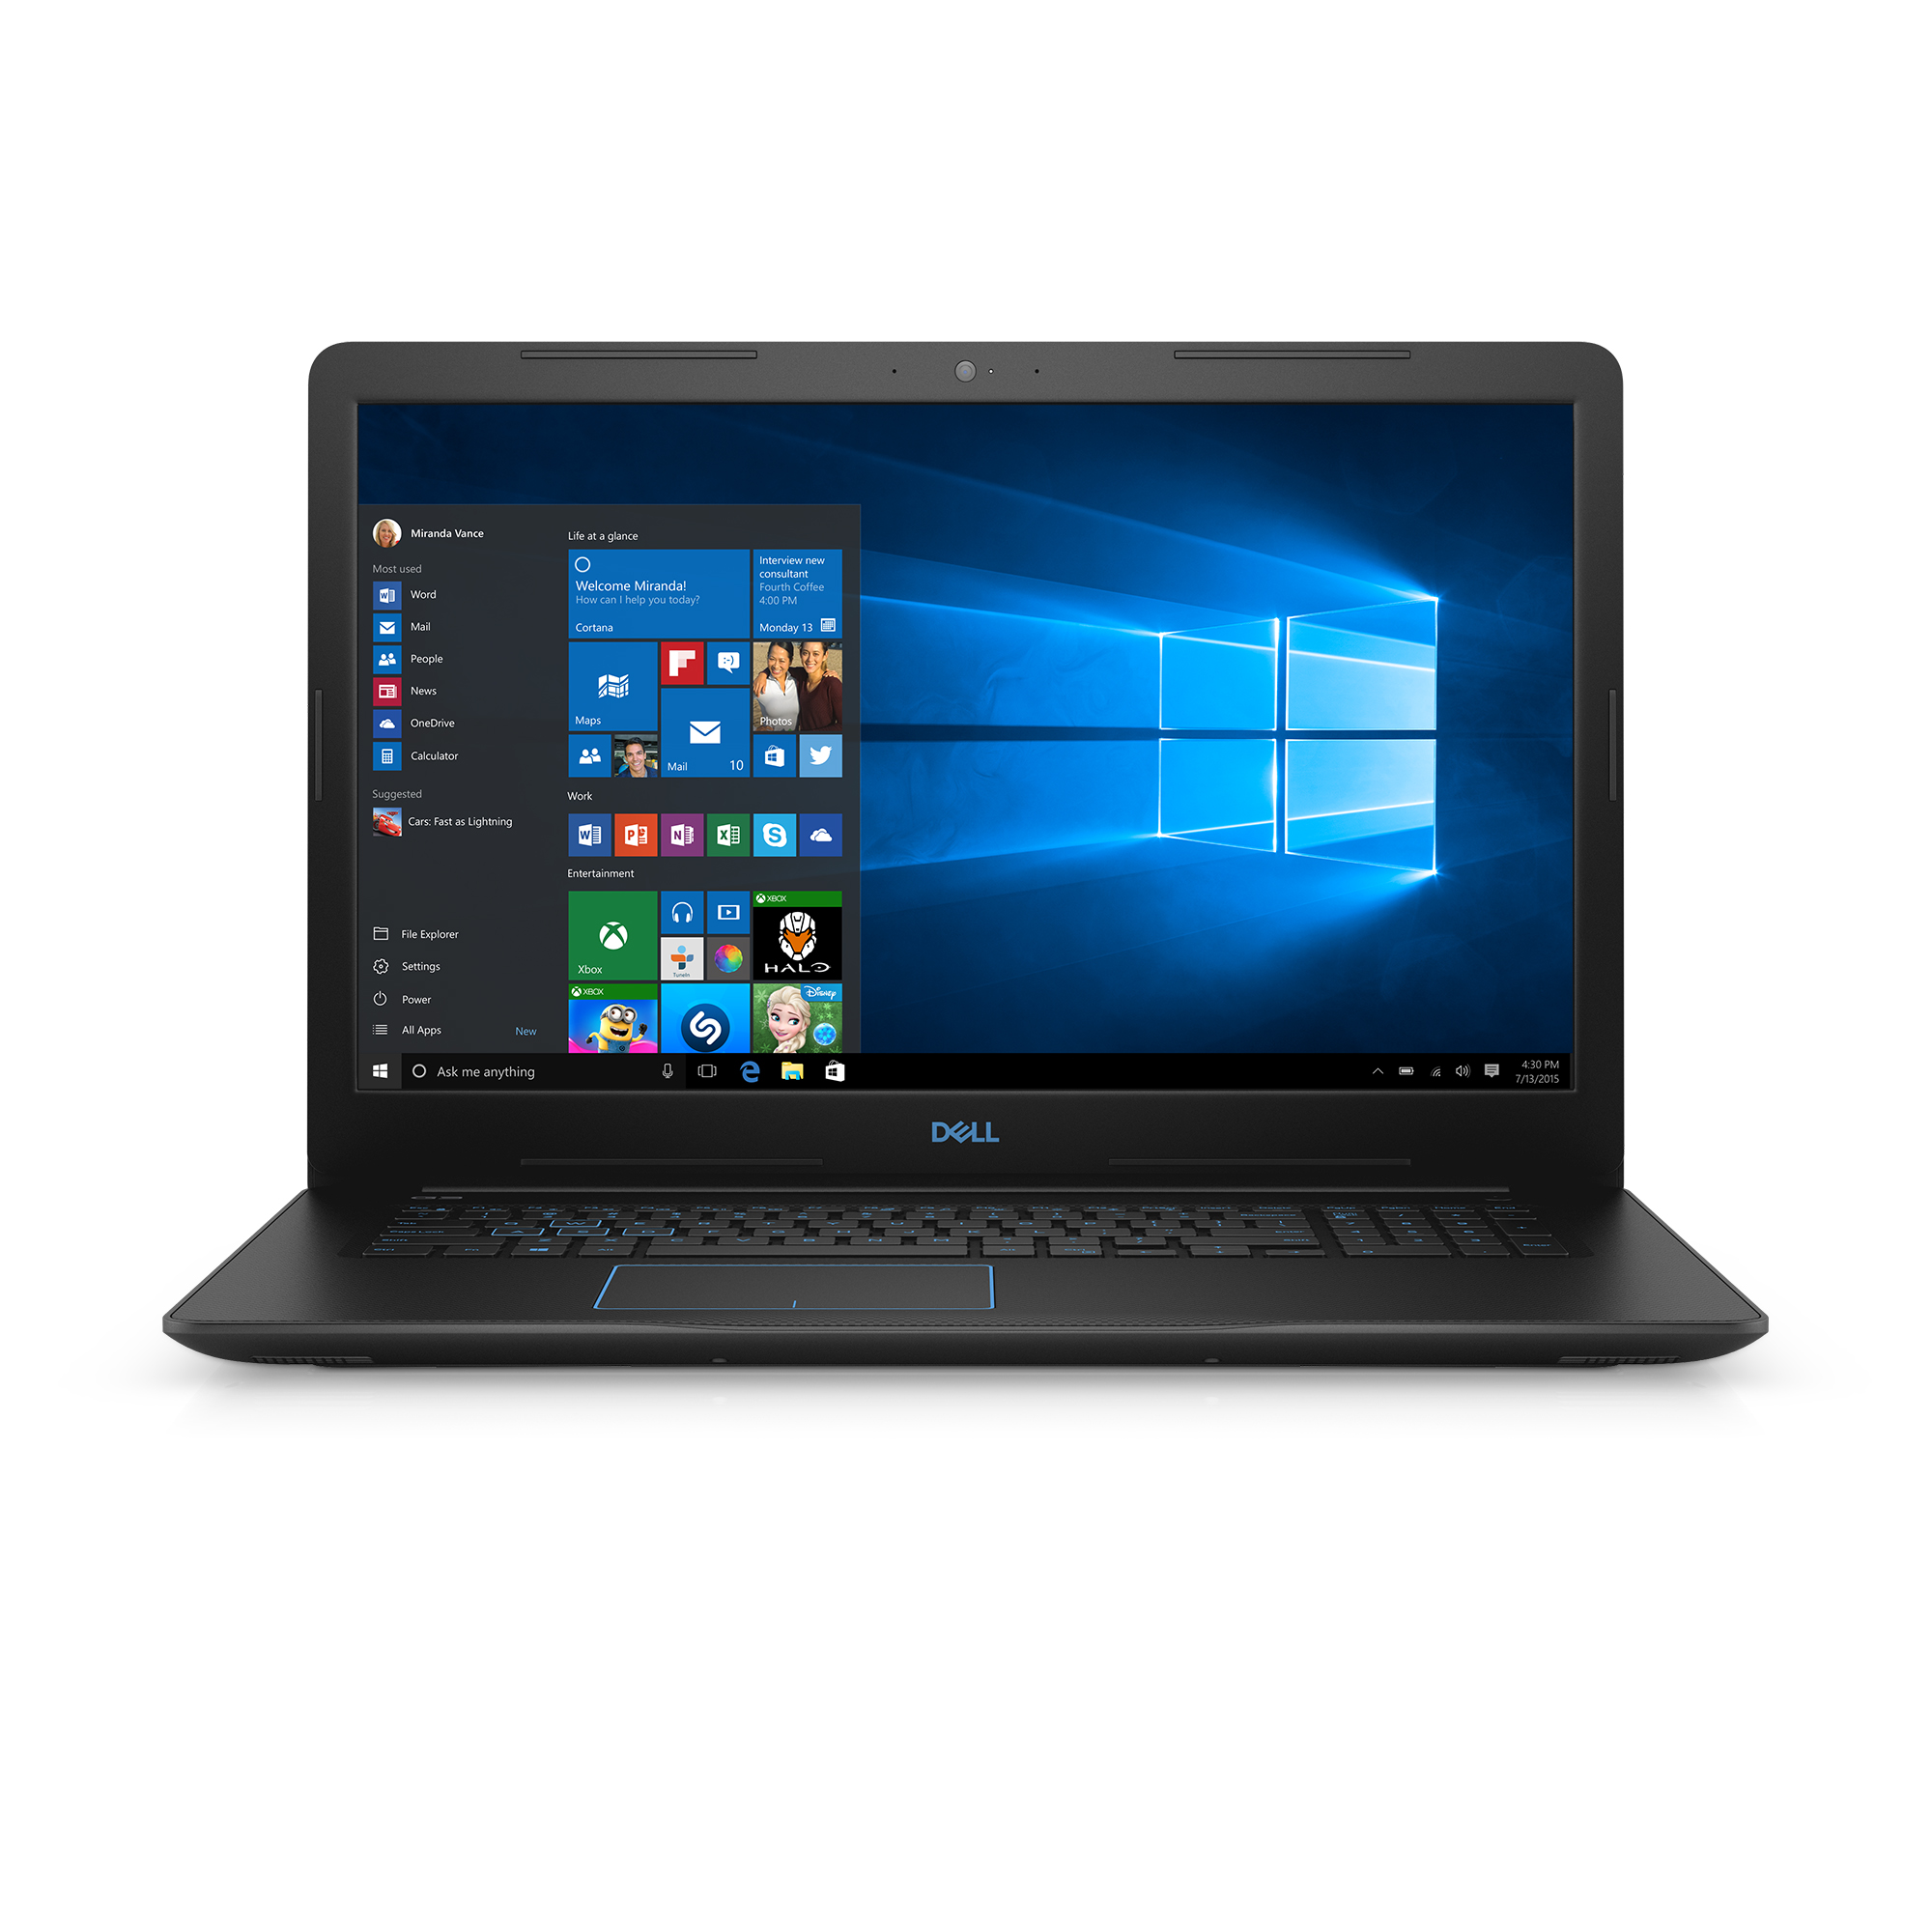 Dell G3 Gaming Laptop 17.3" Intel Core i7-8750H, NVIDIA GeForce GTX 1050Ti, 16GB RAM, 128GB SSD + 1TB HDD WIN 10, G3779-7927BLK-PUS - image 1 of 8